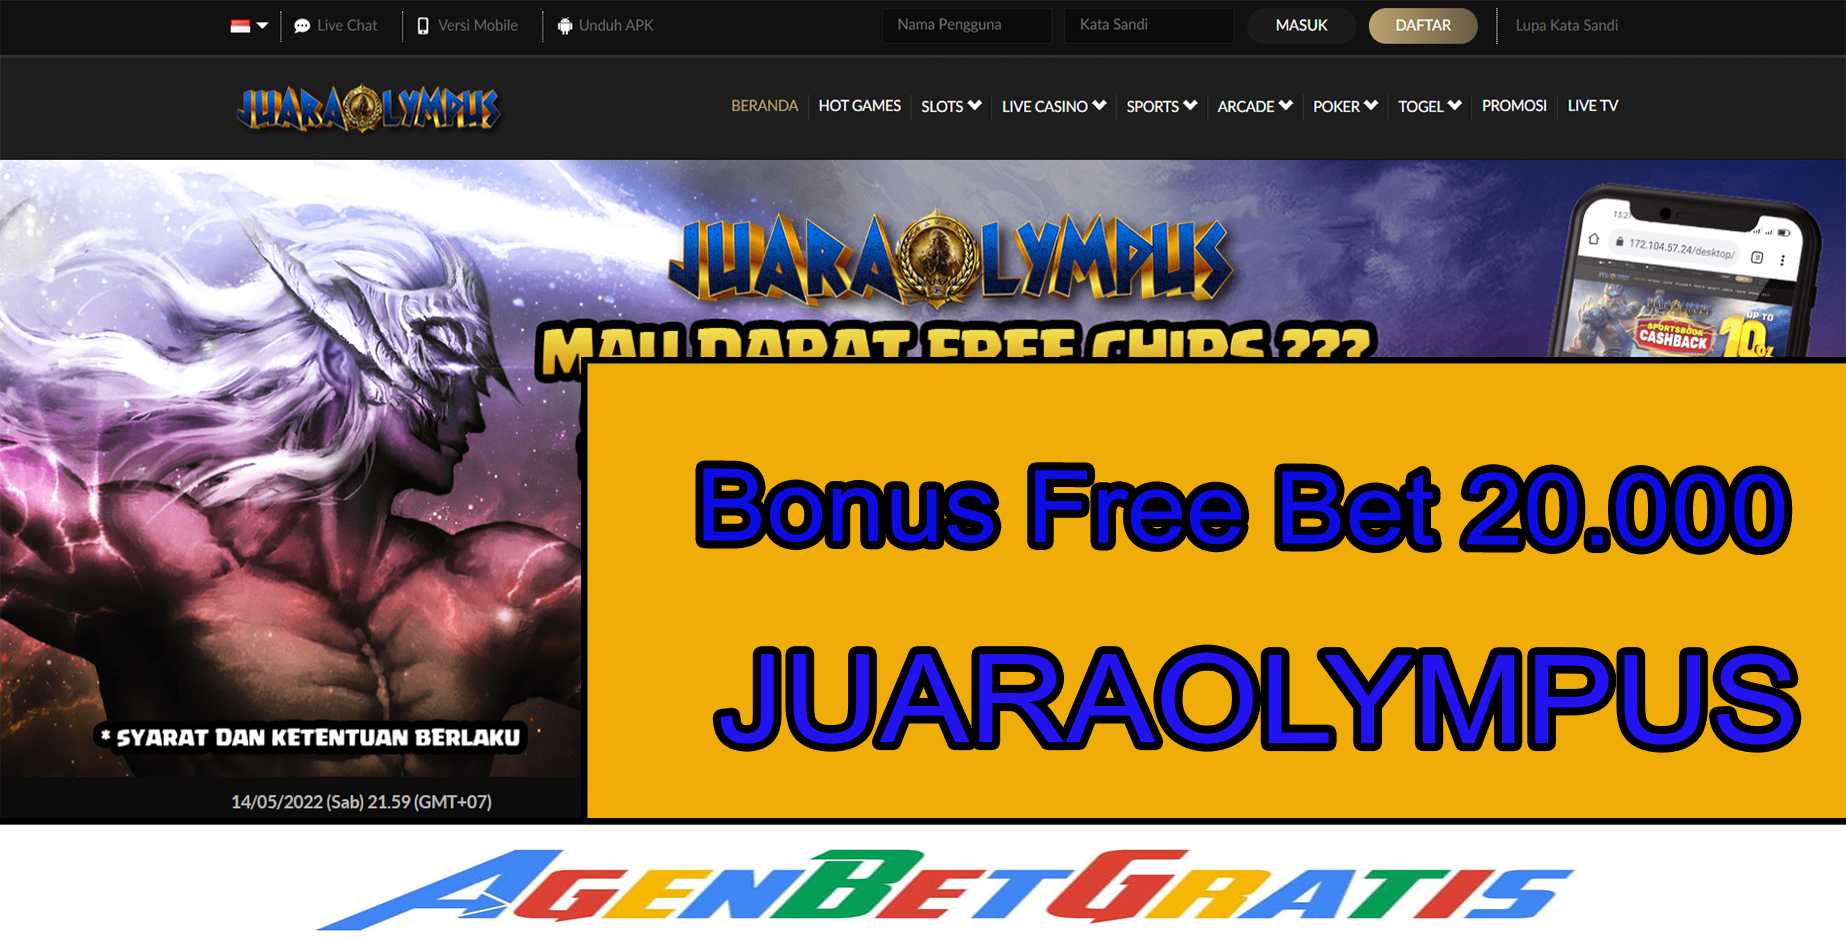 JUARAOLYMPUS - Bonus FreeBet 20.000